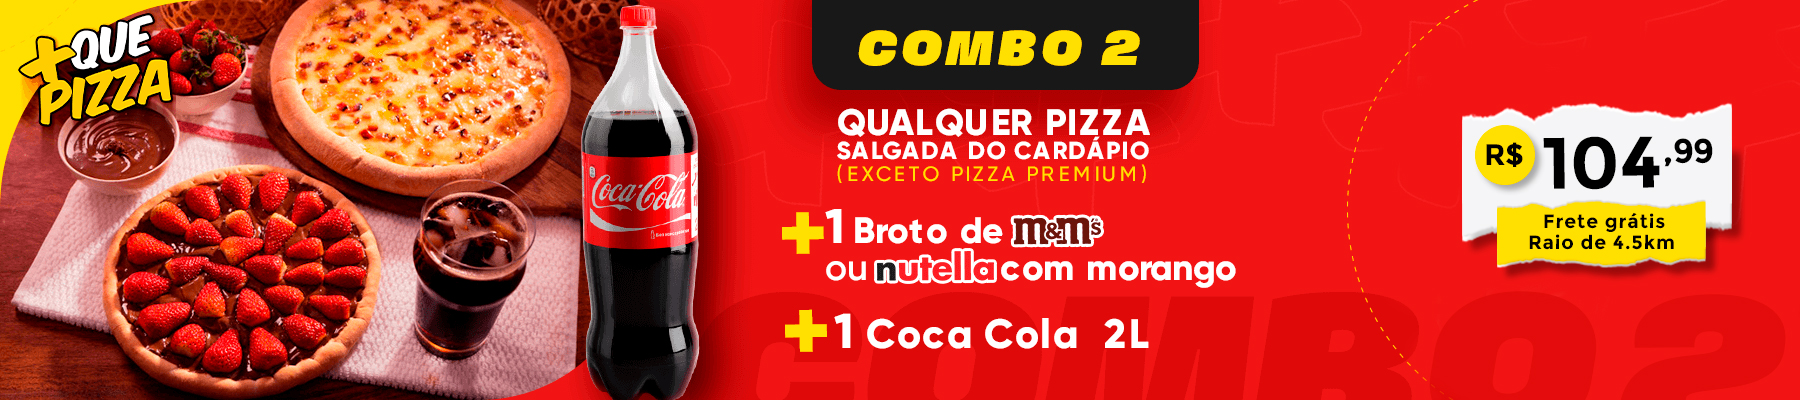 [+Que-Pizza]-Combo-2-Banner-Web-1800x400